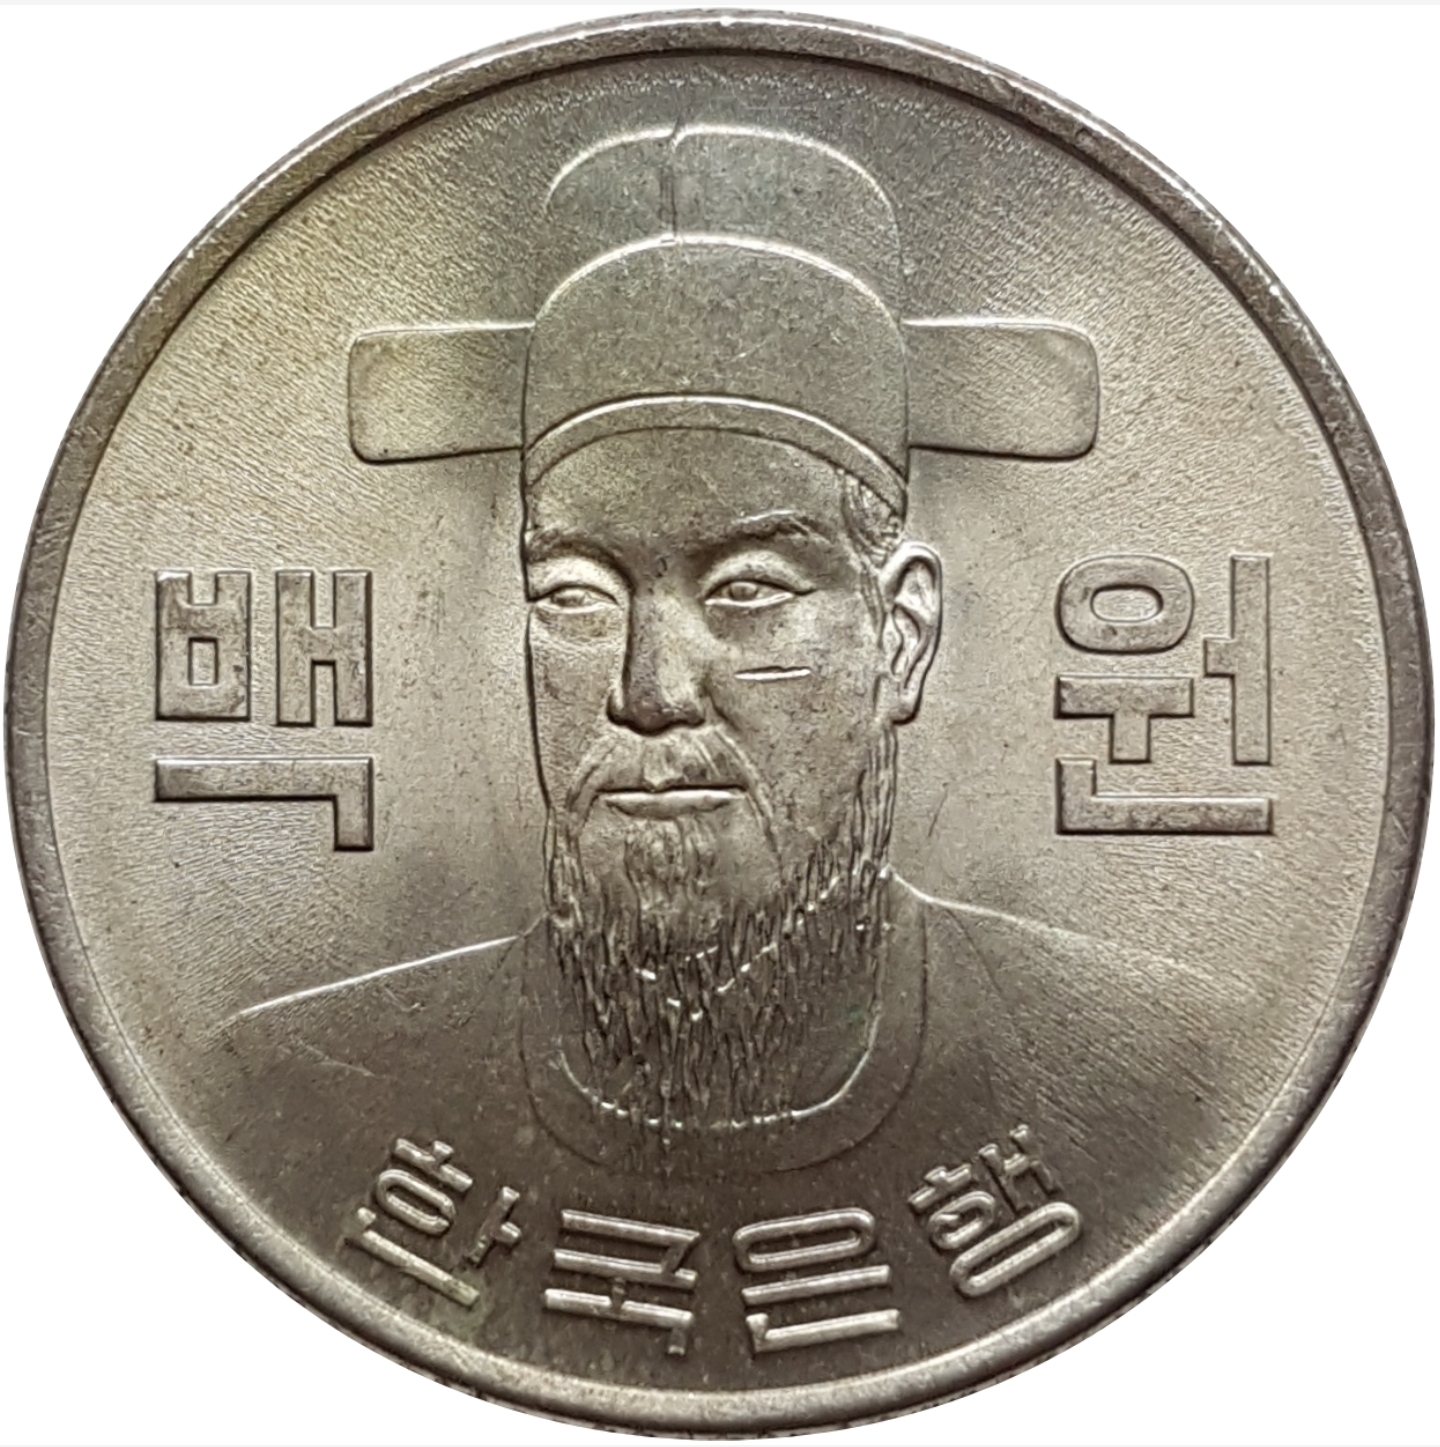 South Korea Republic () Won Coin - NumizMarket